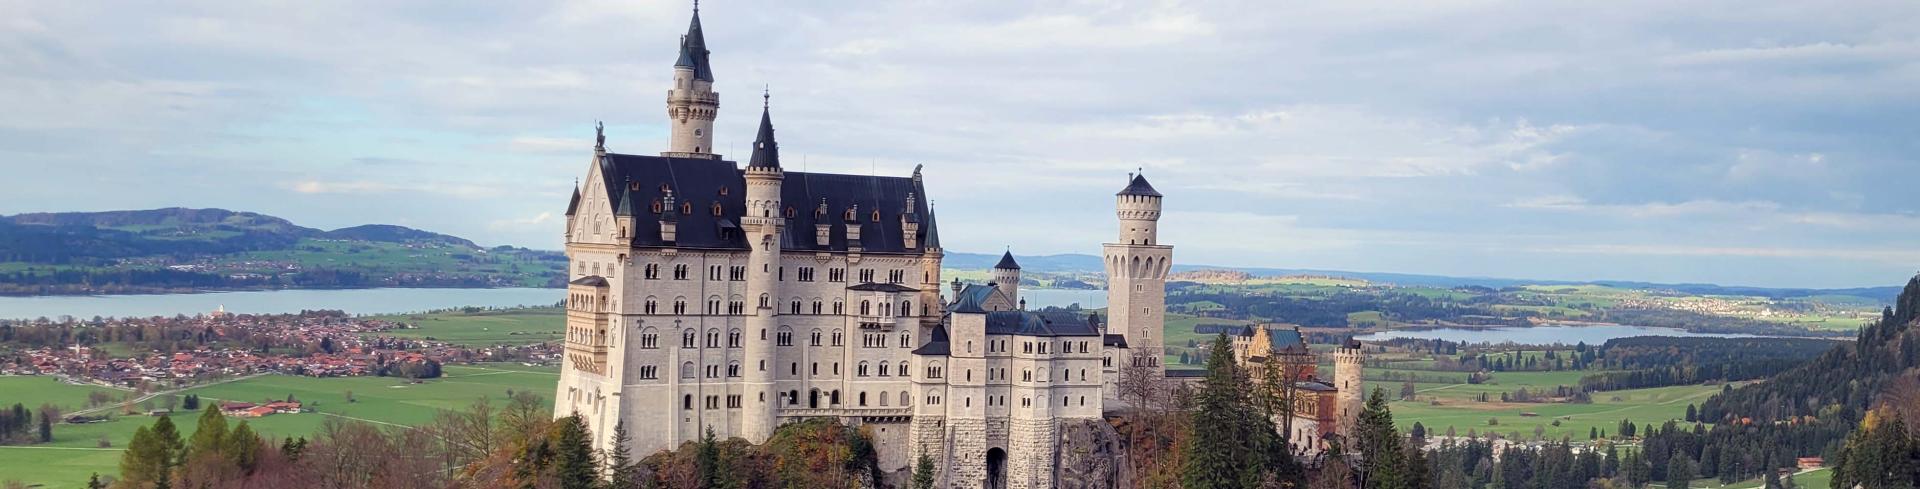 Neuschwanstein Castle Tips for Visiting